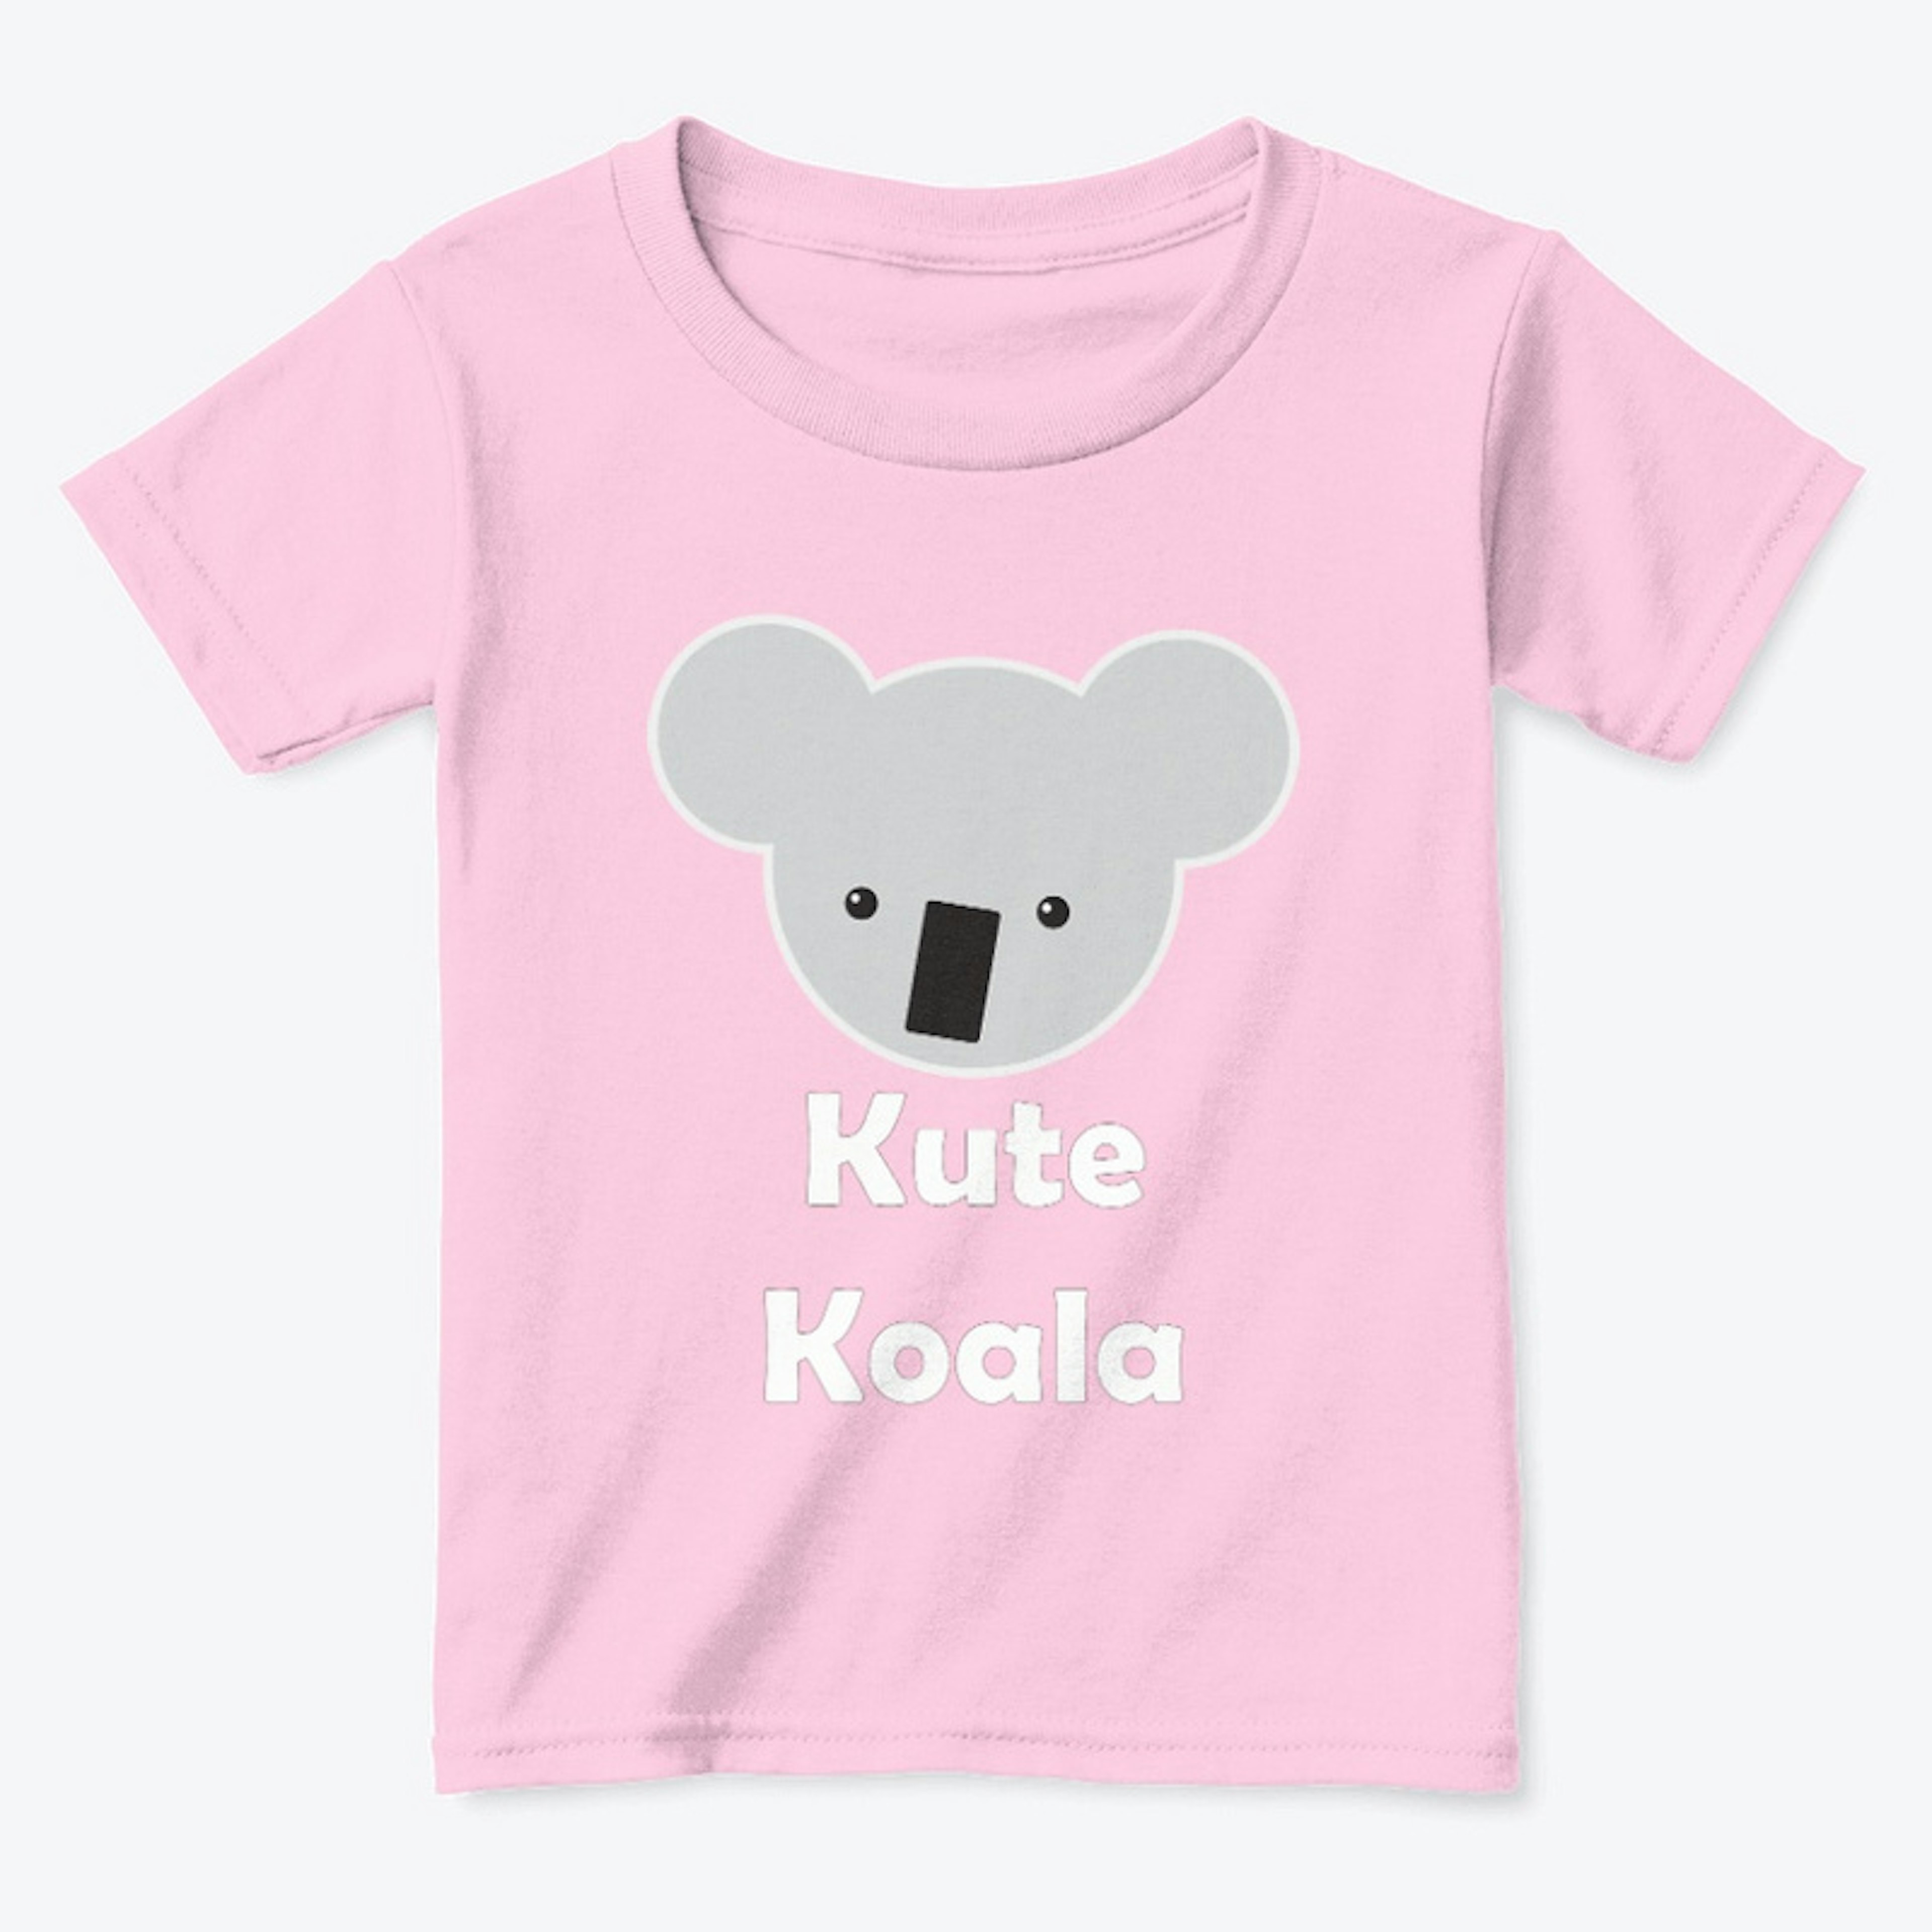 Kute koala t-shirt